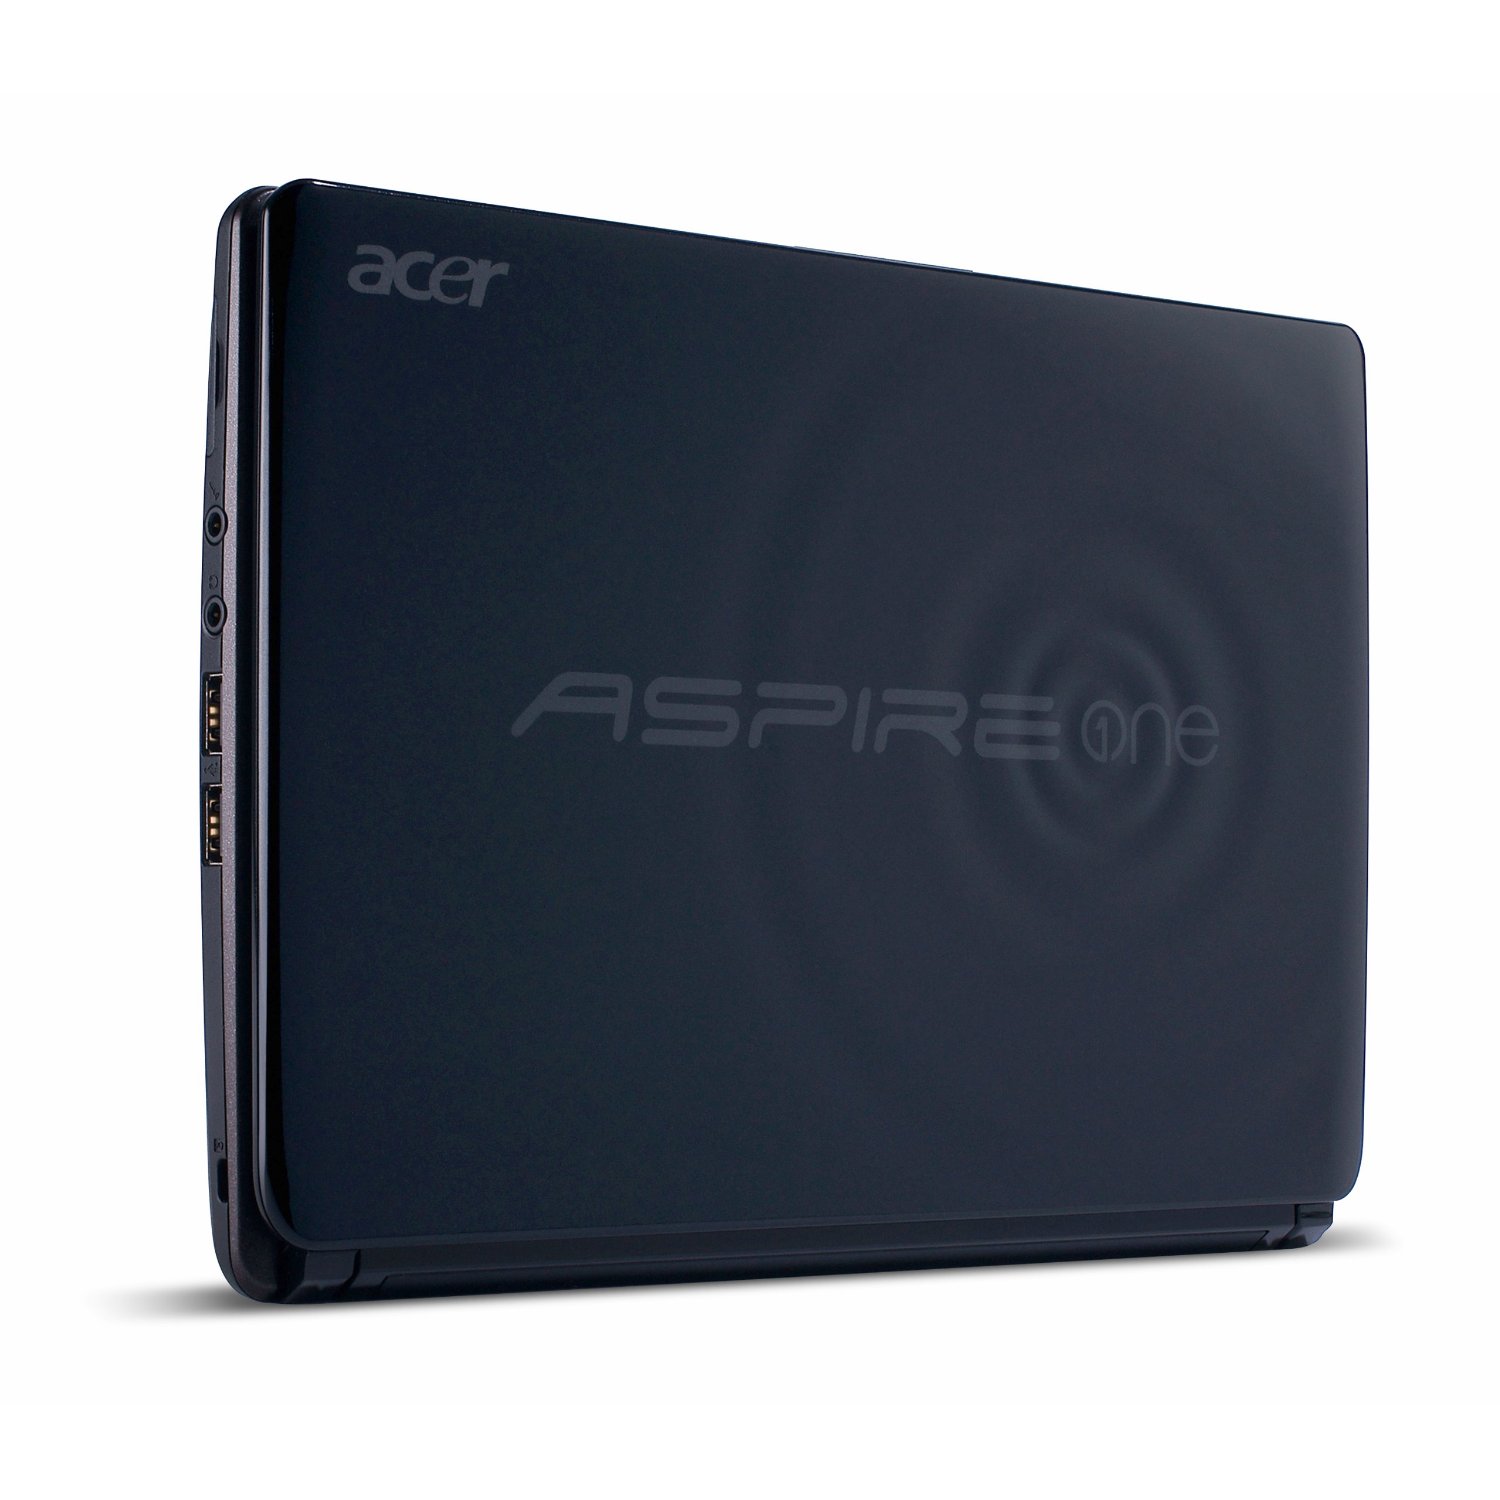 Acer Aspire One 722-BZ608